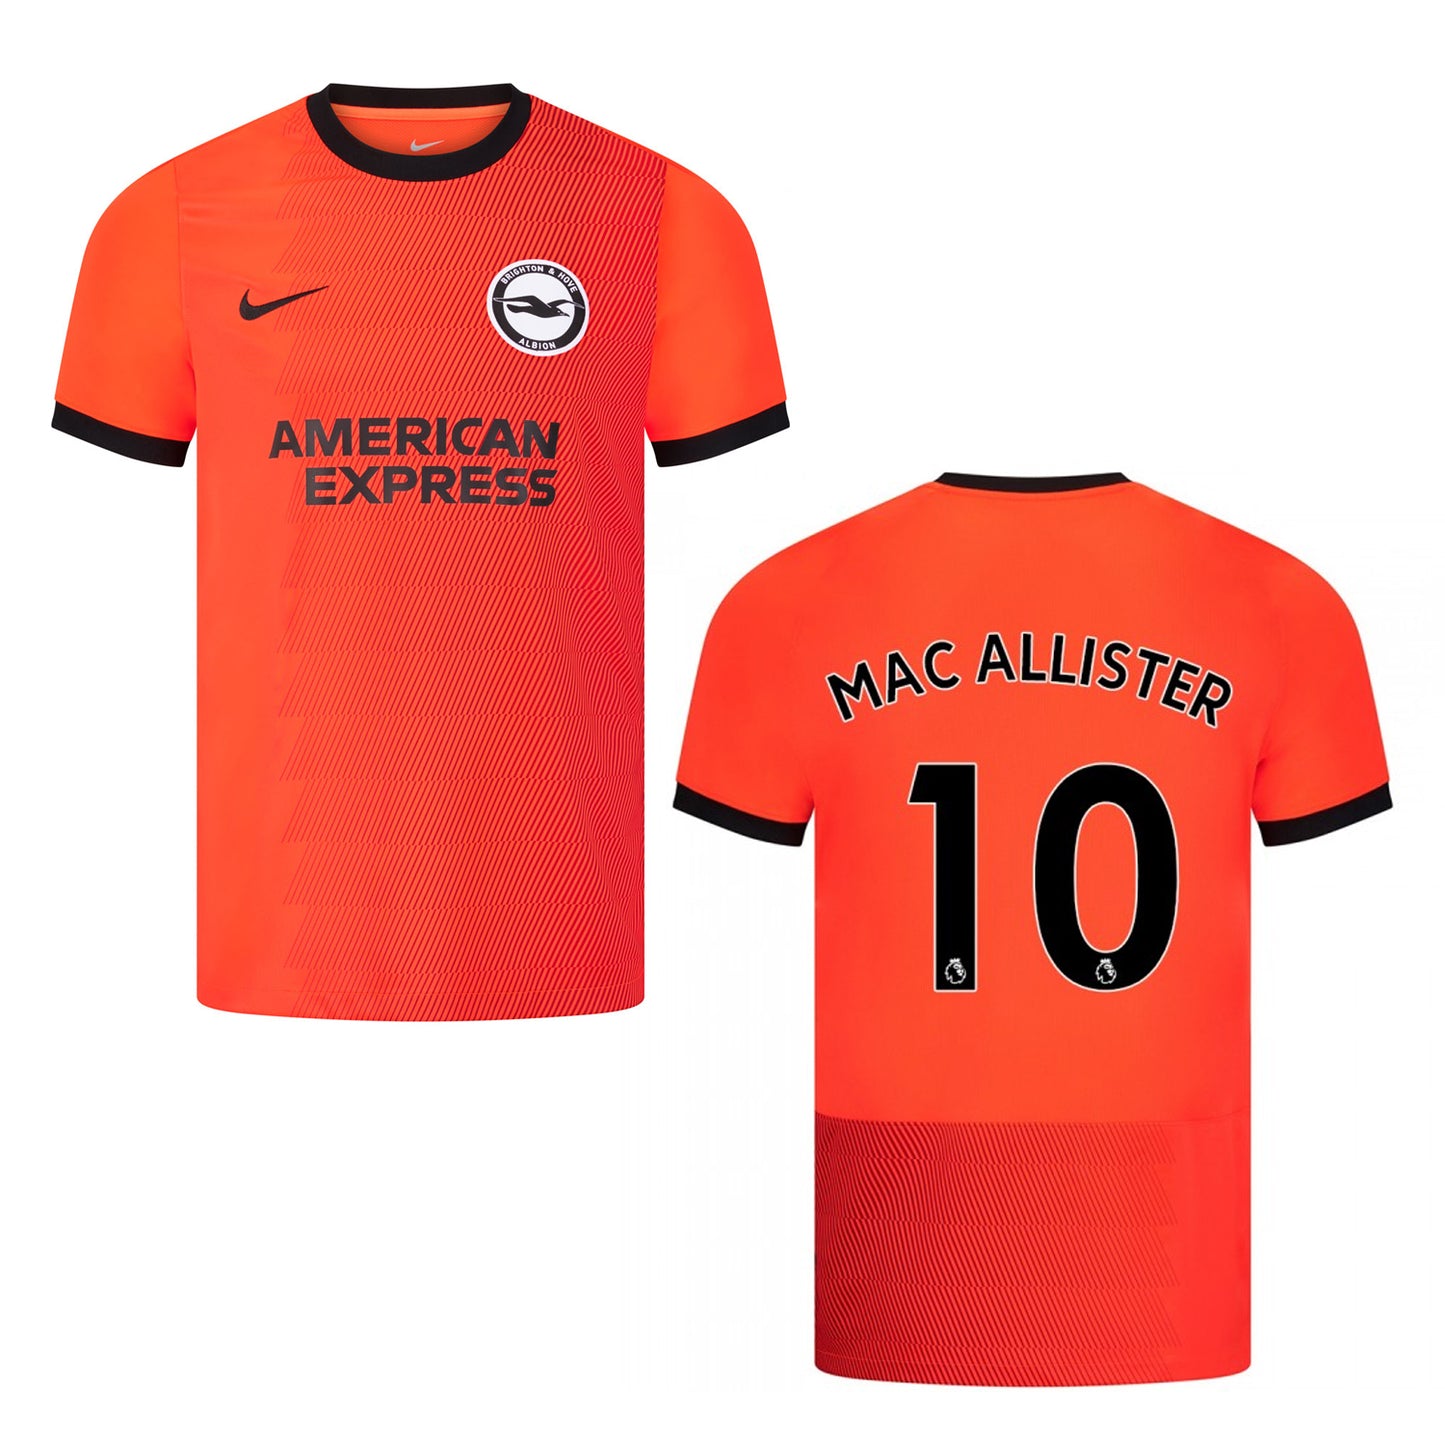 Alexis Mac Allister Brighton 10 Jersey